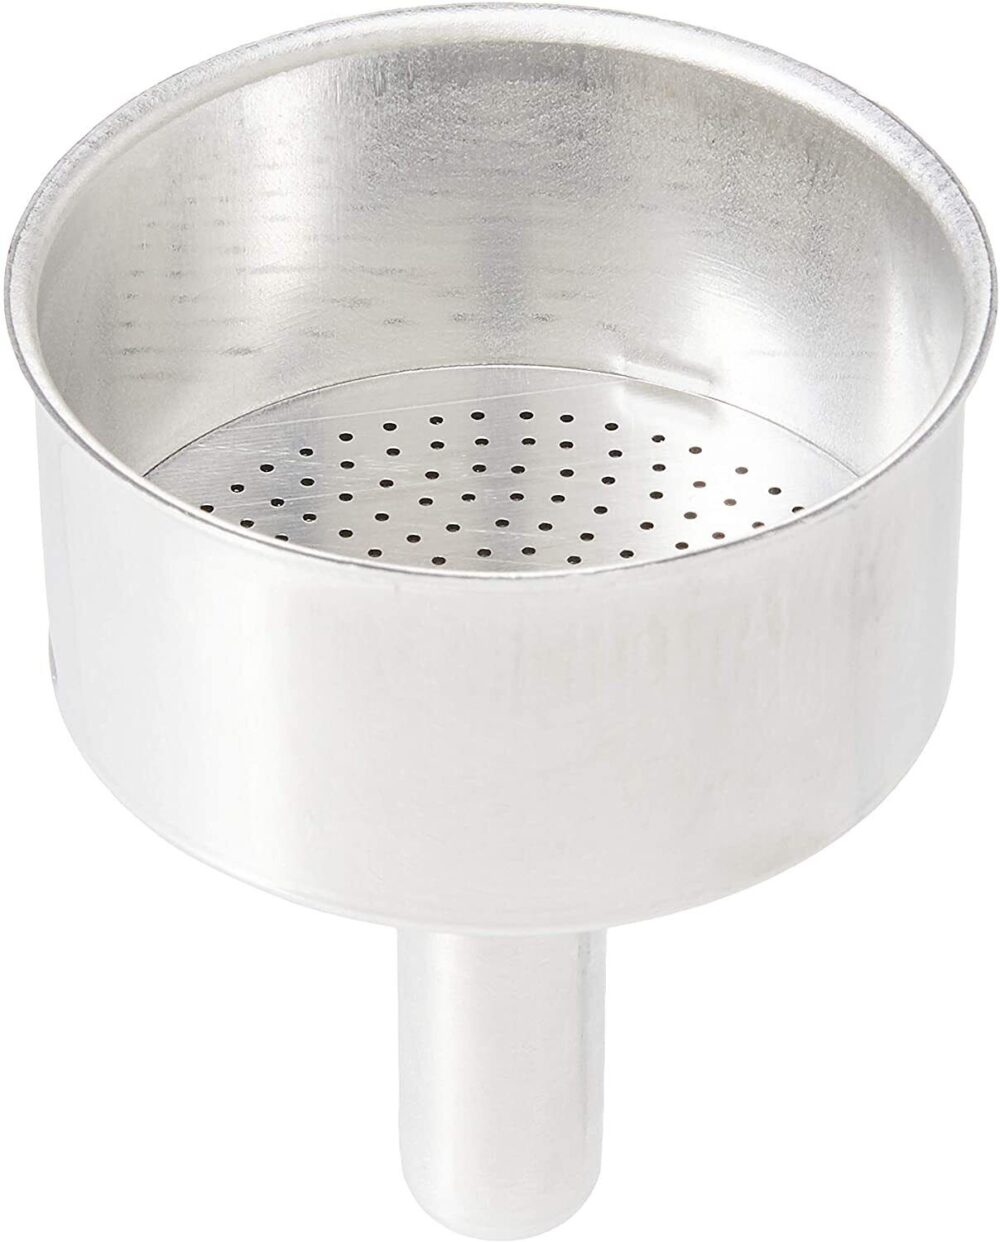 bialetti aluminium funnel cup perculator coffee maker bialetti cups blister